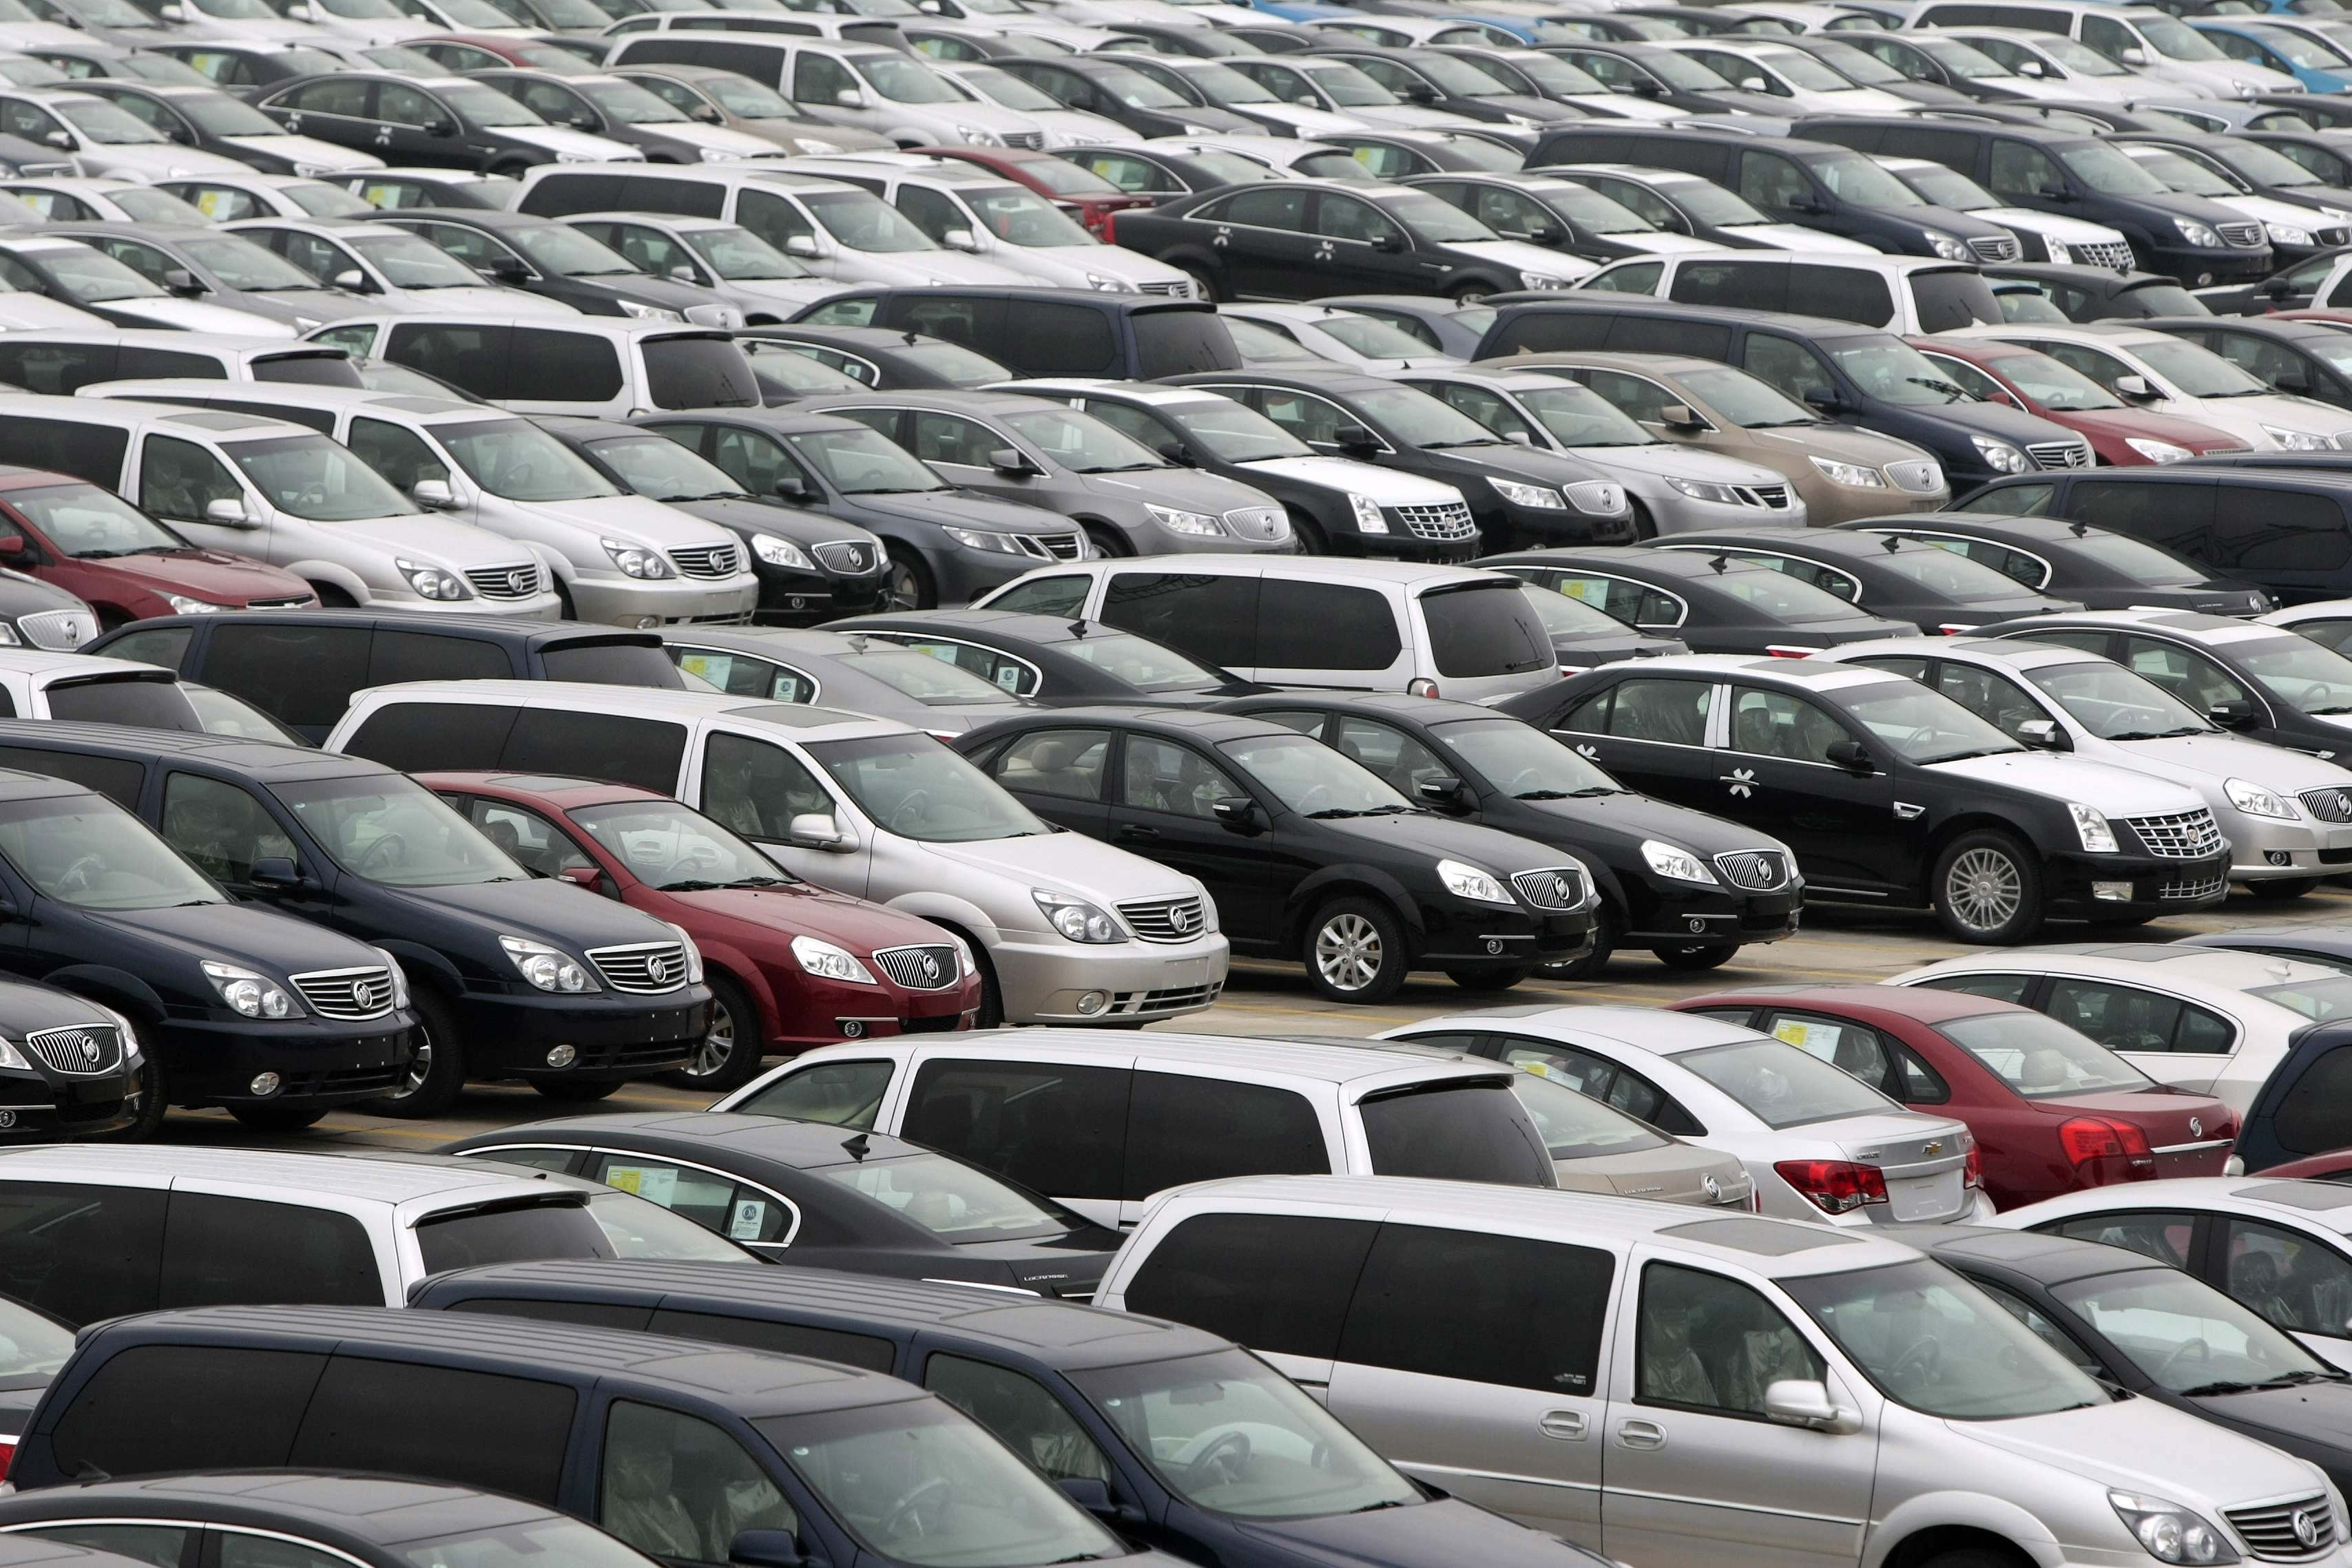 FCA chases compensation for car park investors